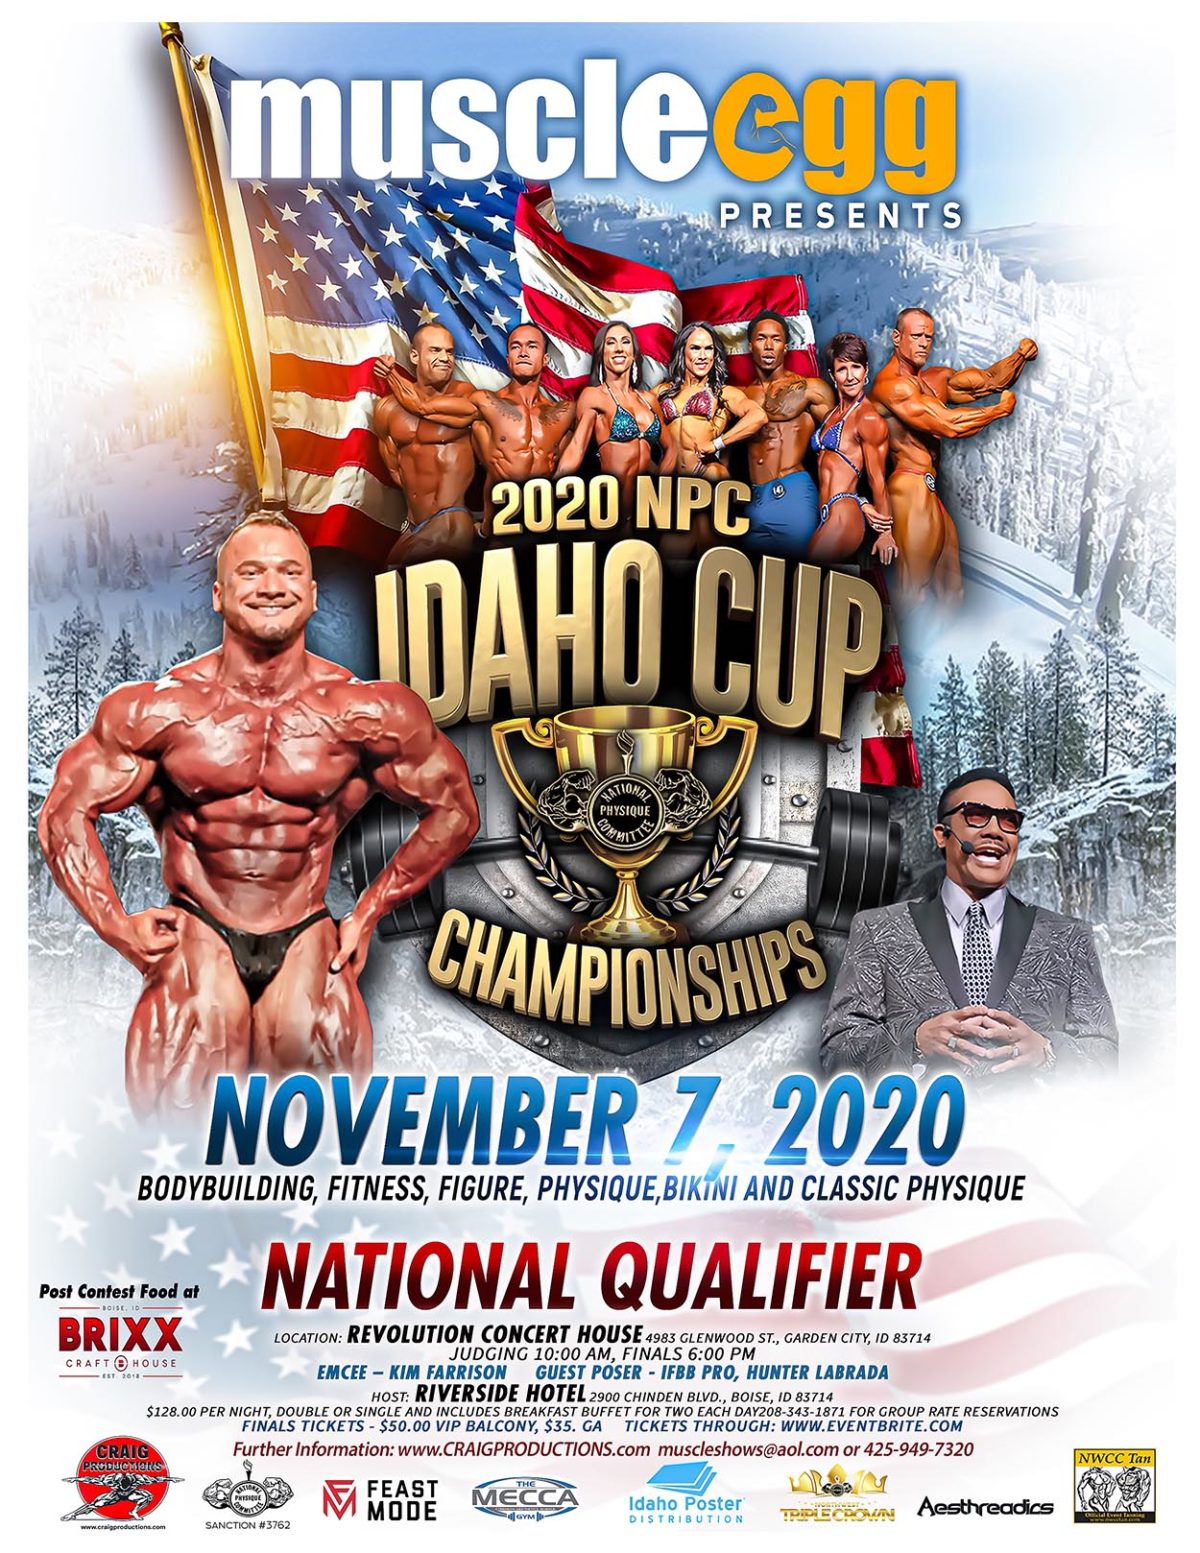 NPC Idaho Cup Craig Productions